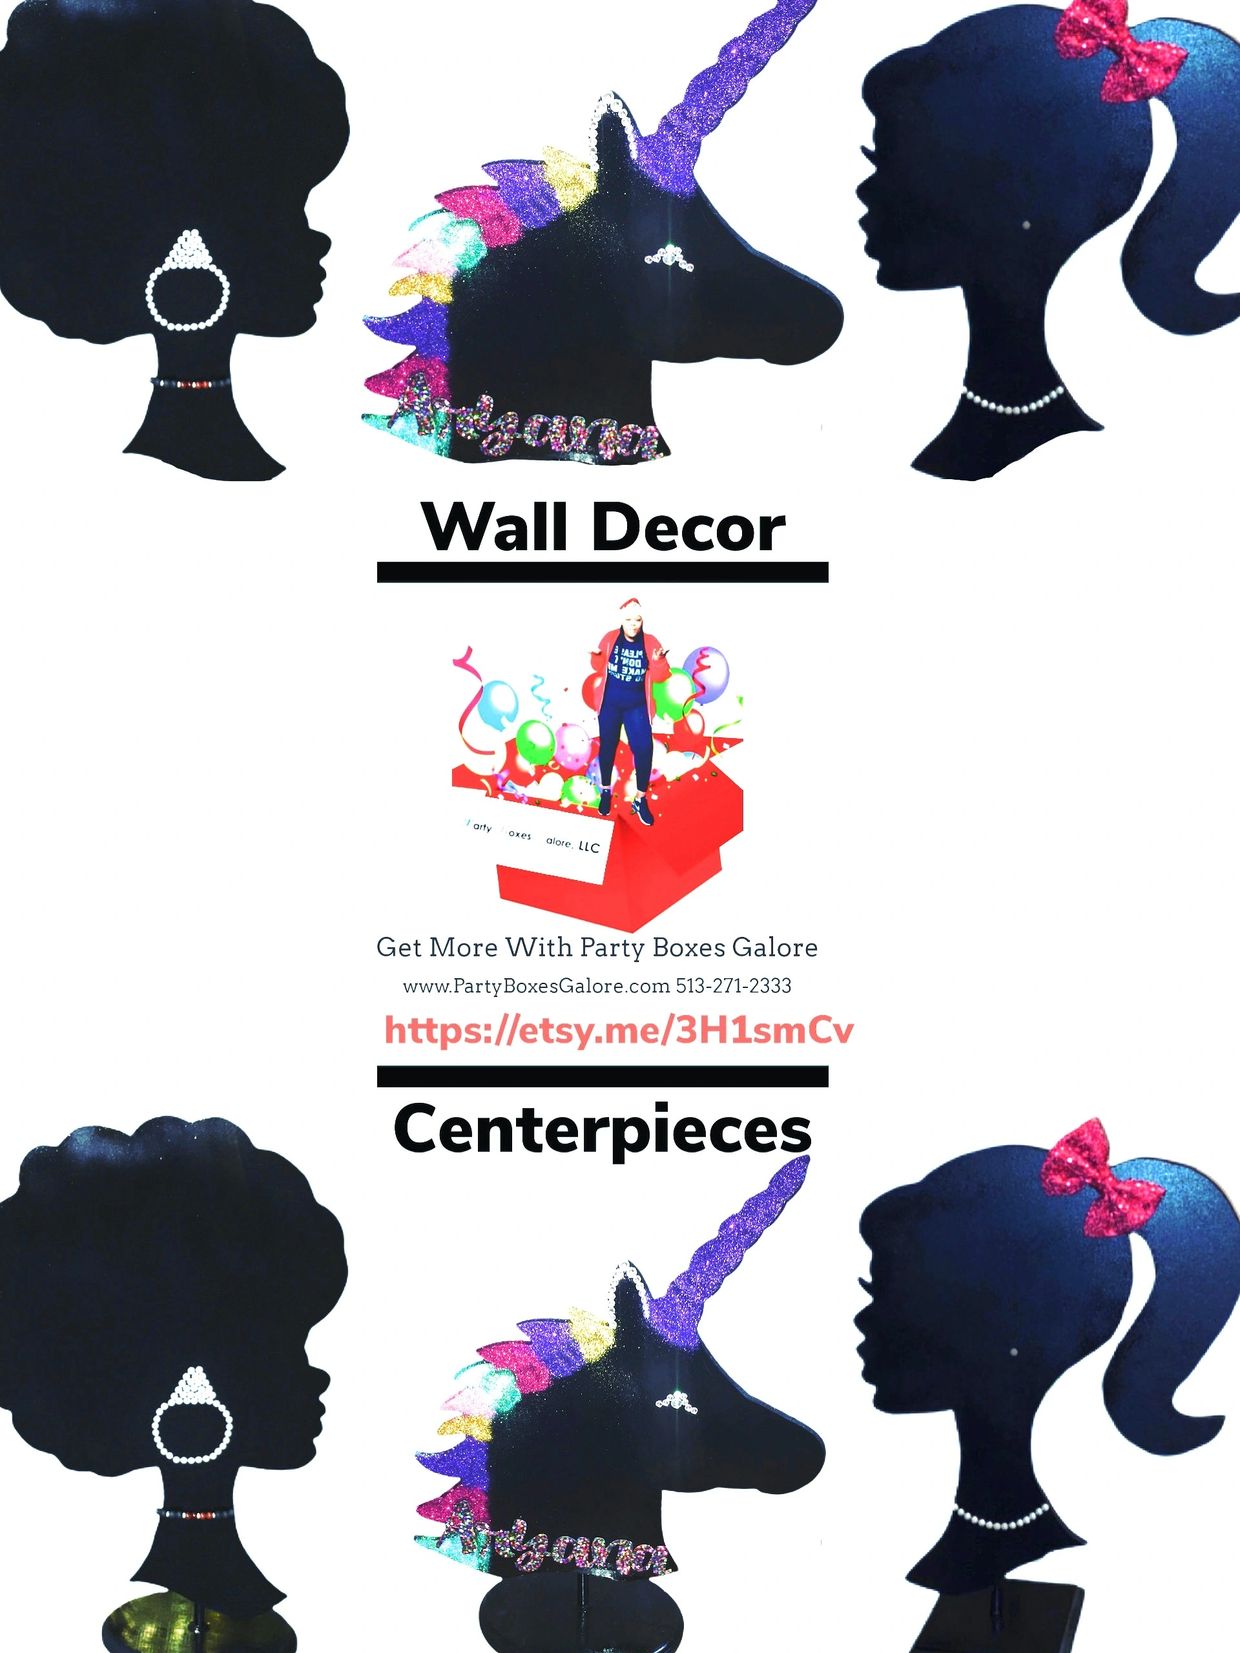 Handmade Centerpieces & Wall Decor Now Available On Amazon Handmade & Etsy